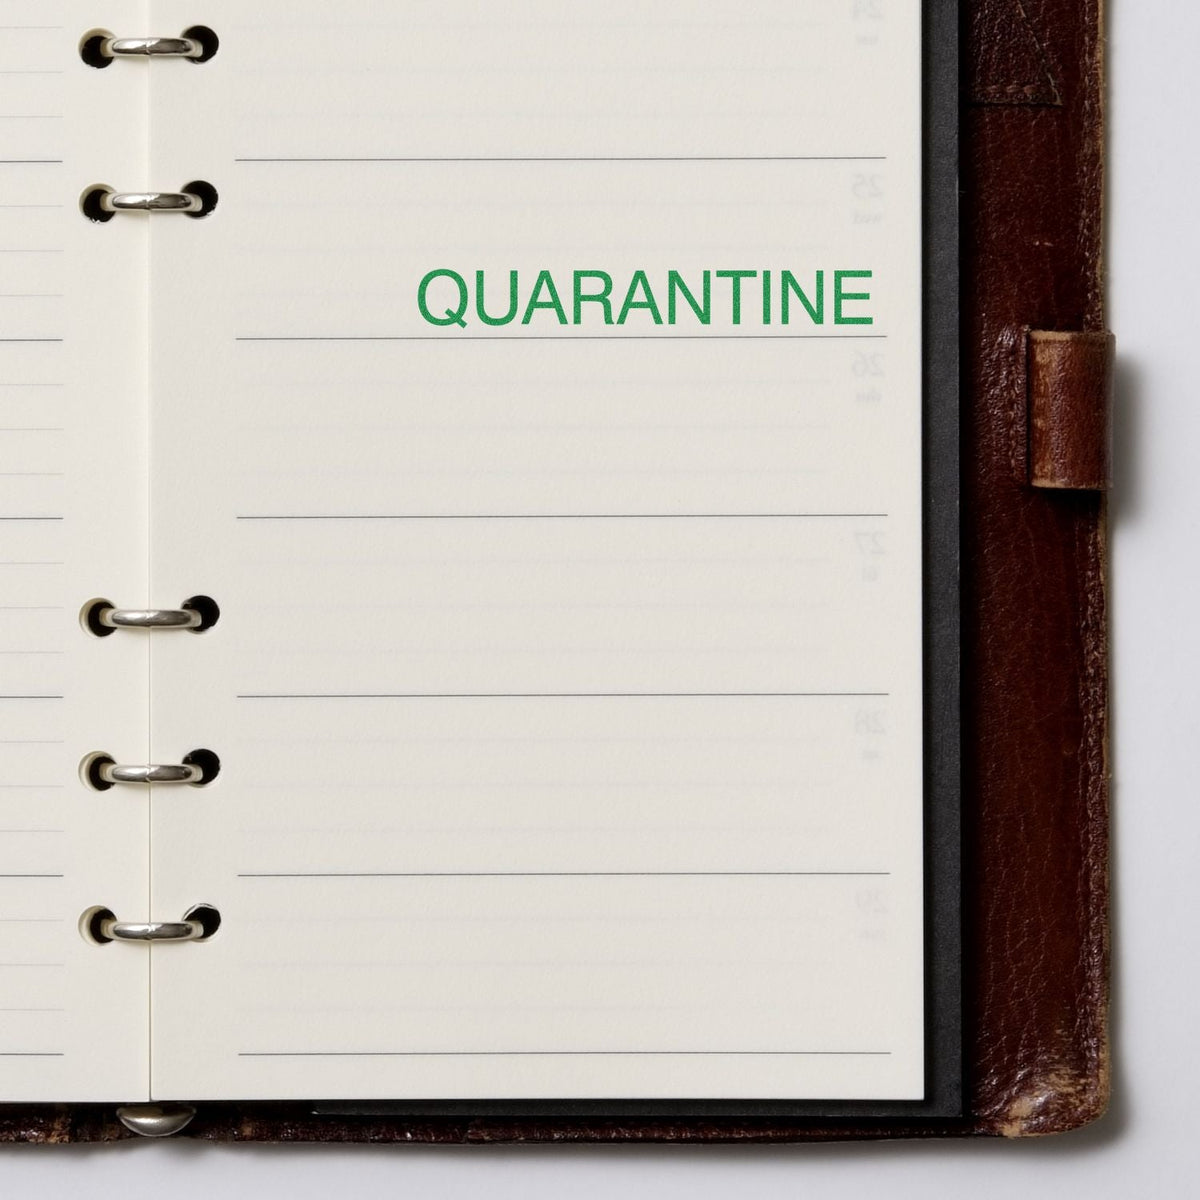 Self-Inking Quarantine Stamp In Use